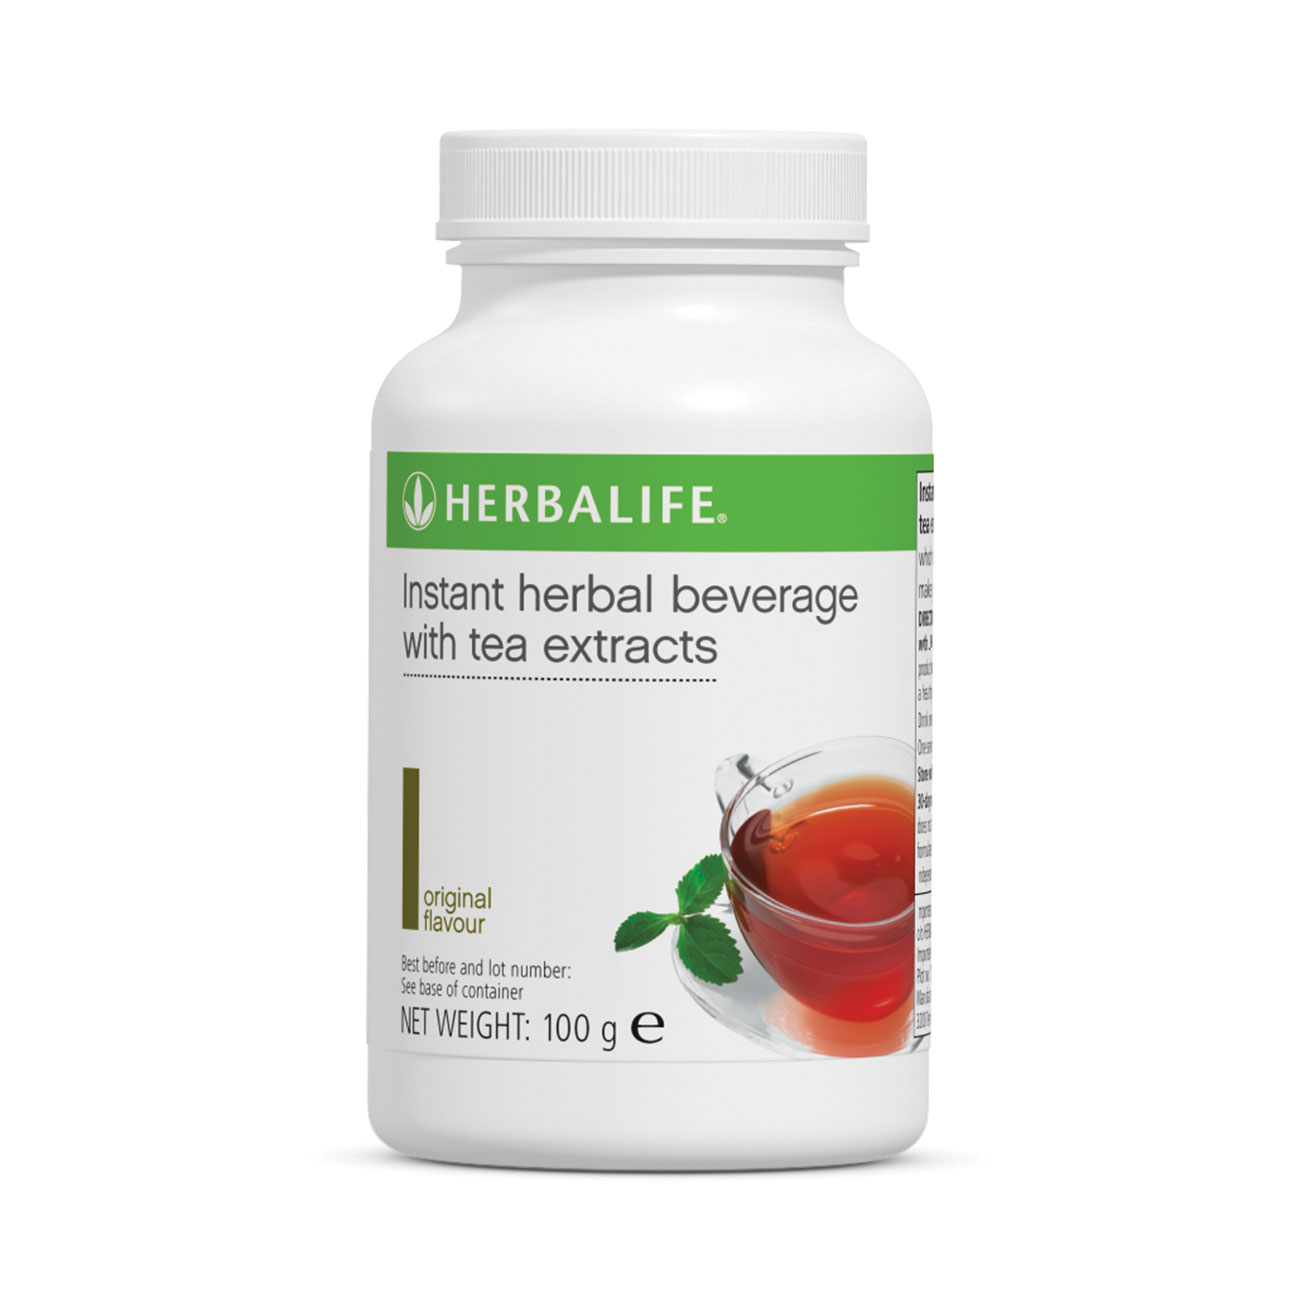 Instant Herbal Beverage  Original 100g product shot